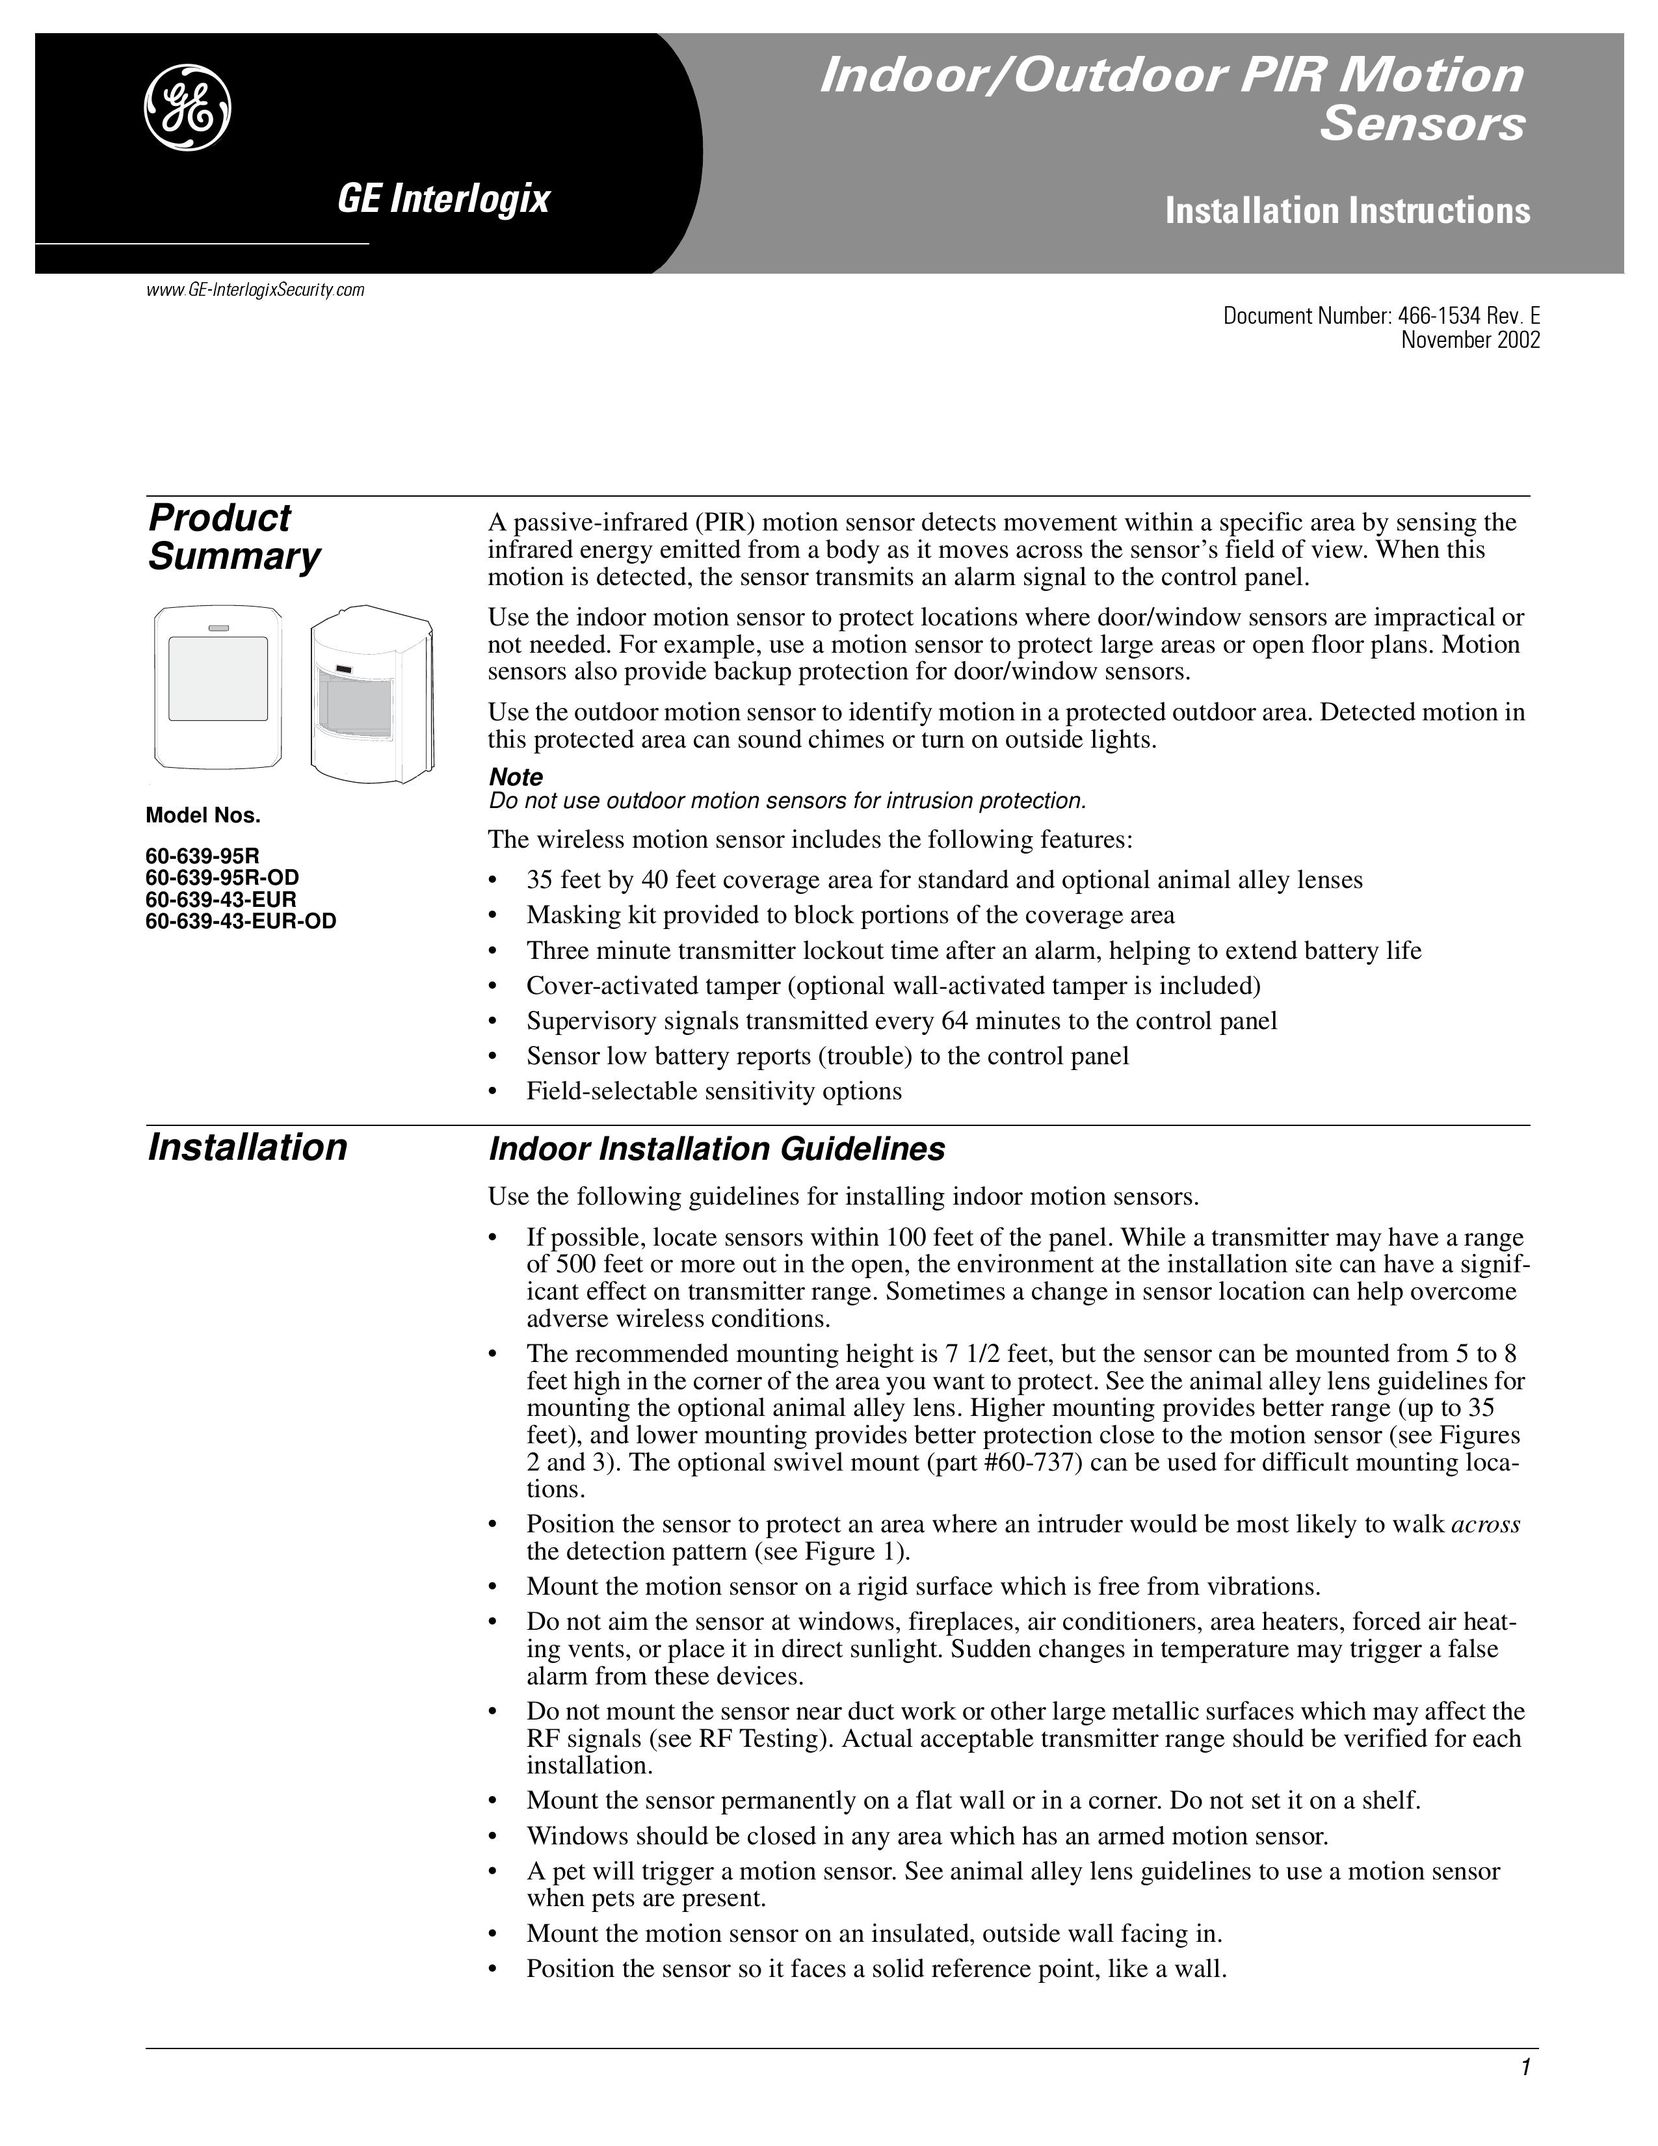 GE 60-639-43-EUR-OD Home Security System User Manual